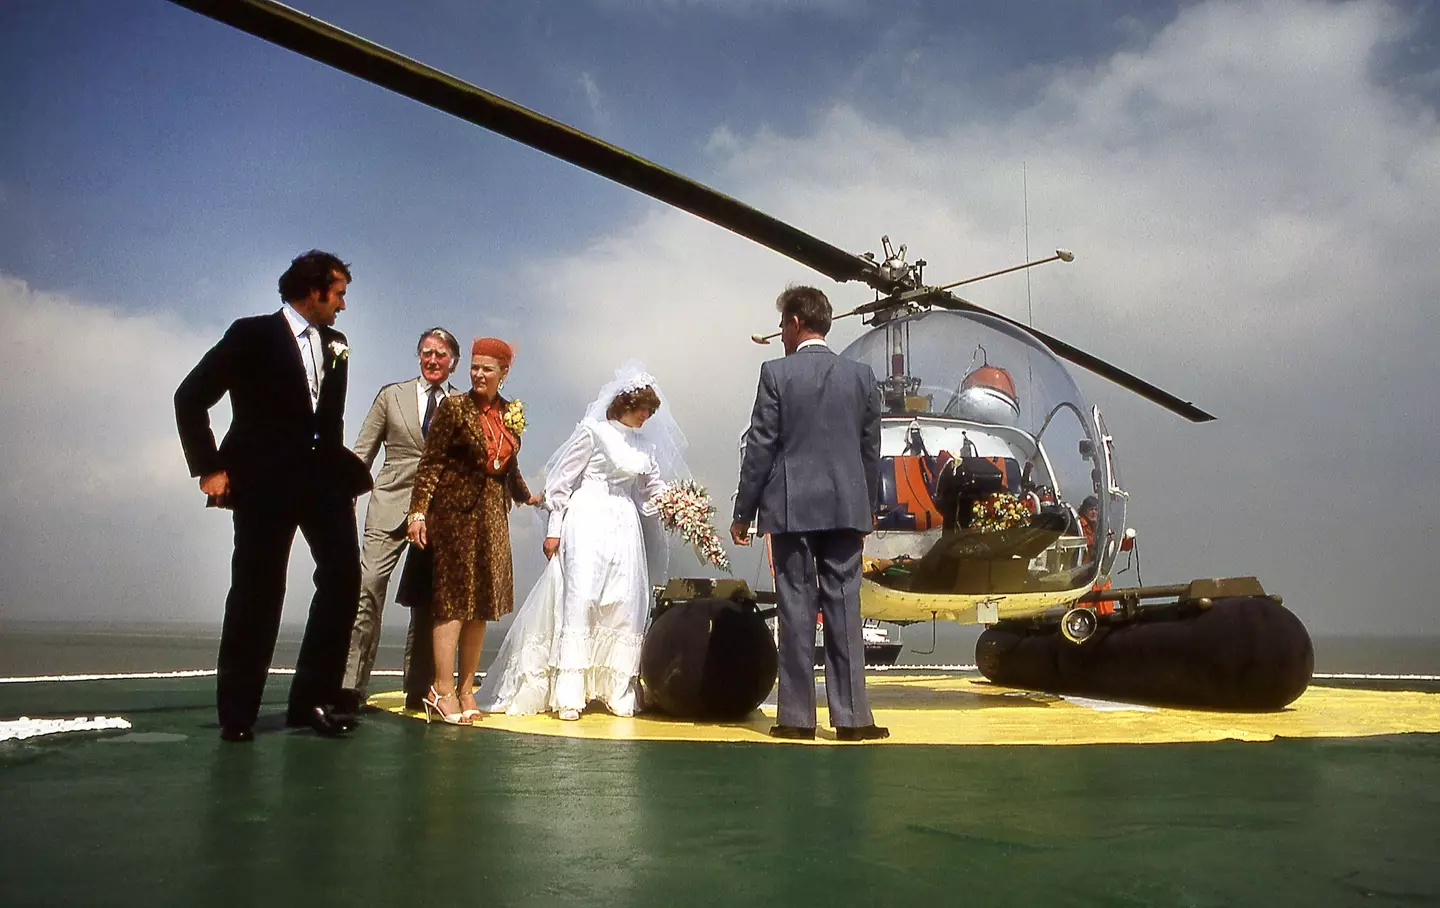 Prince Michael Bates' wedding day at Sealand in 1979.